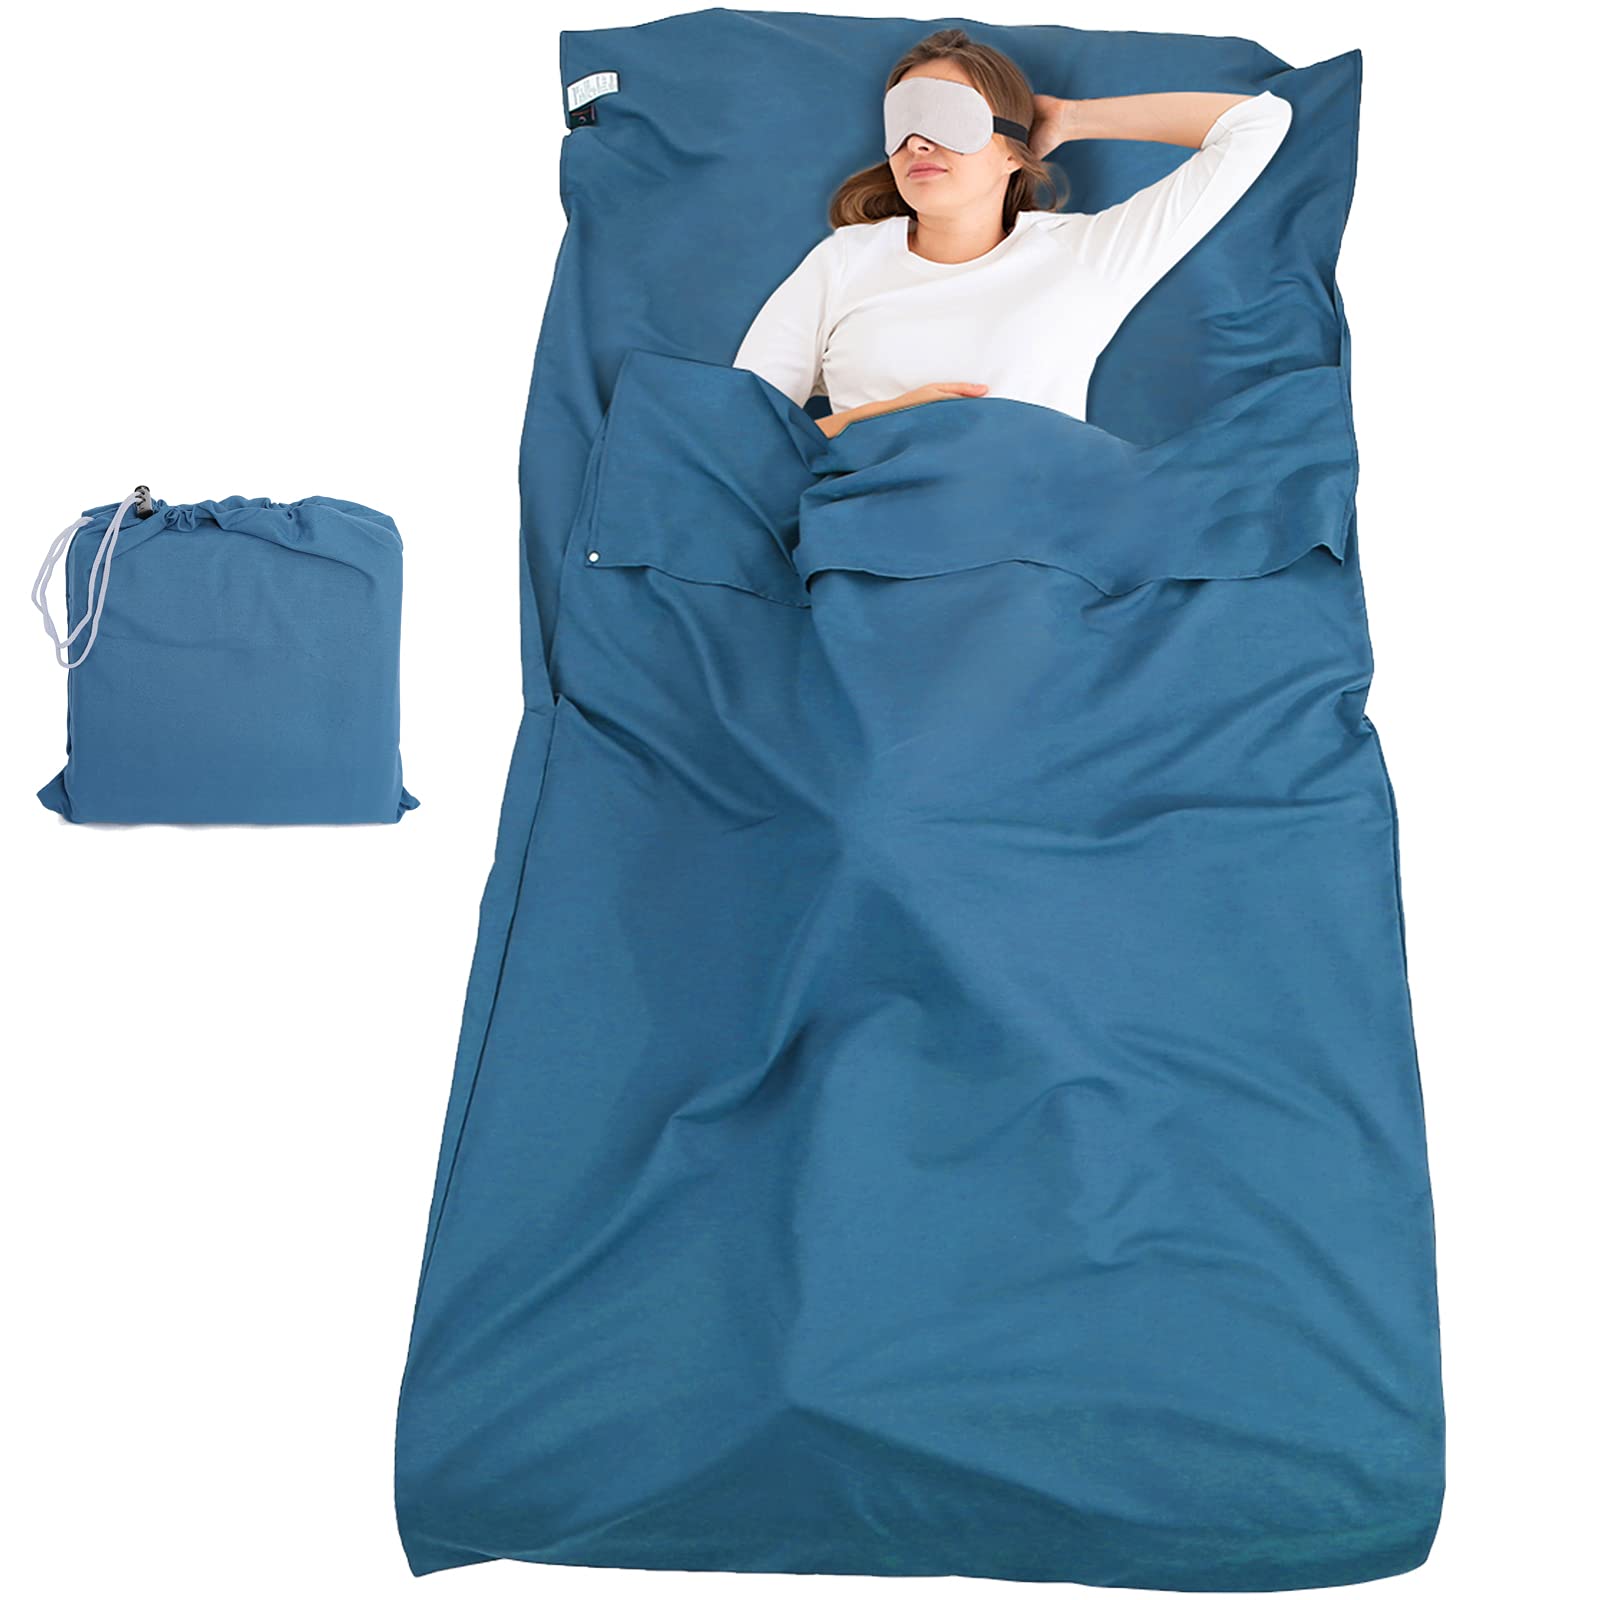 Sleeping Bag Liner and Camping Sheet Sleeping Sack Sheets for Backpacking Lightweight Single Sleep Sack Comfortable Slee